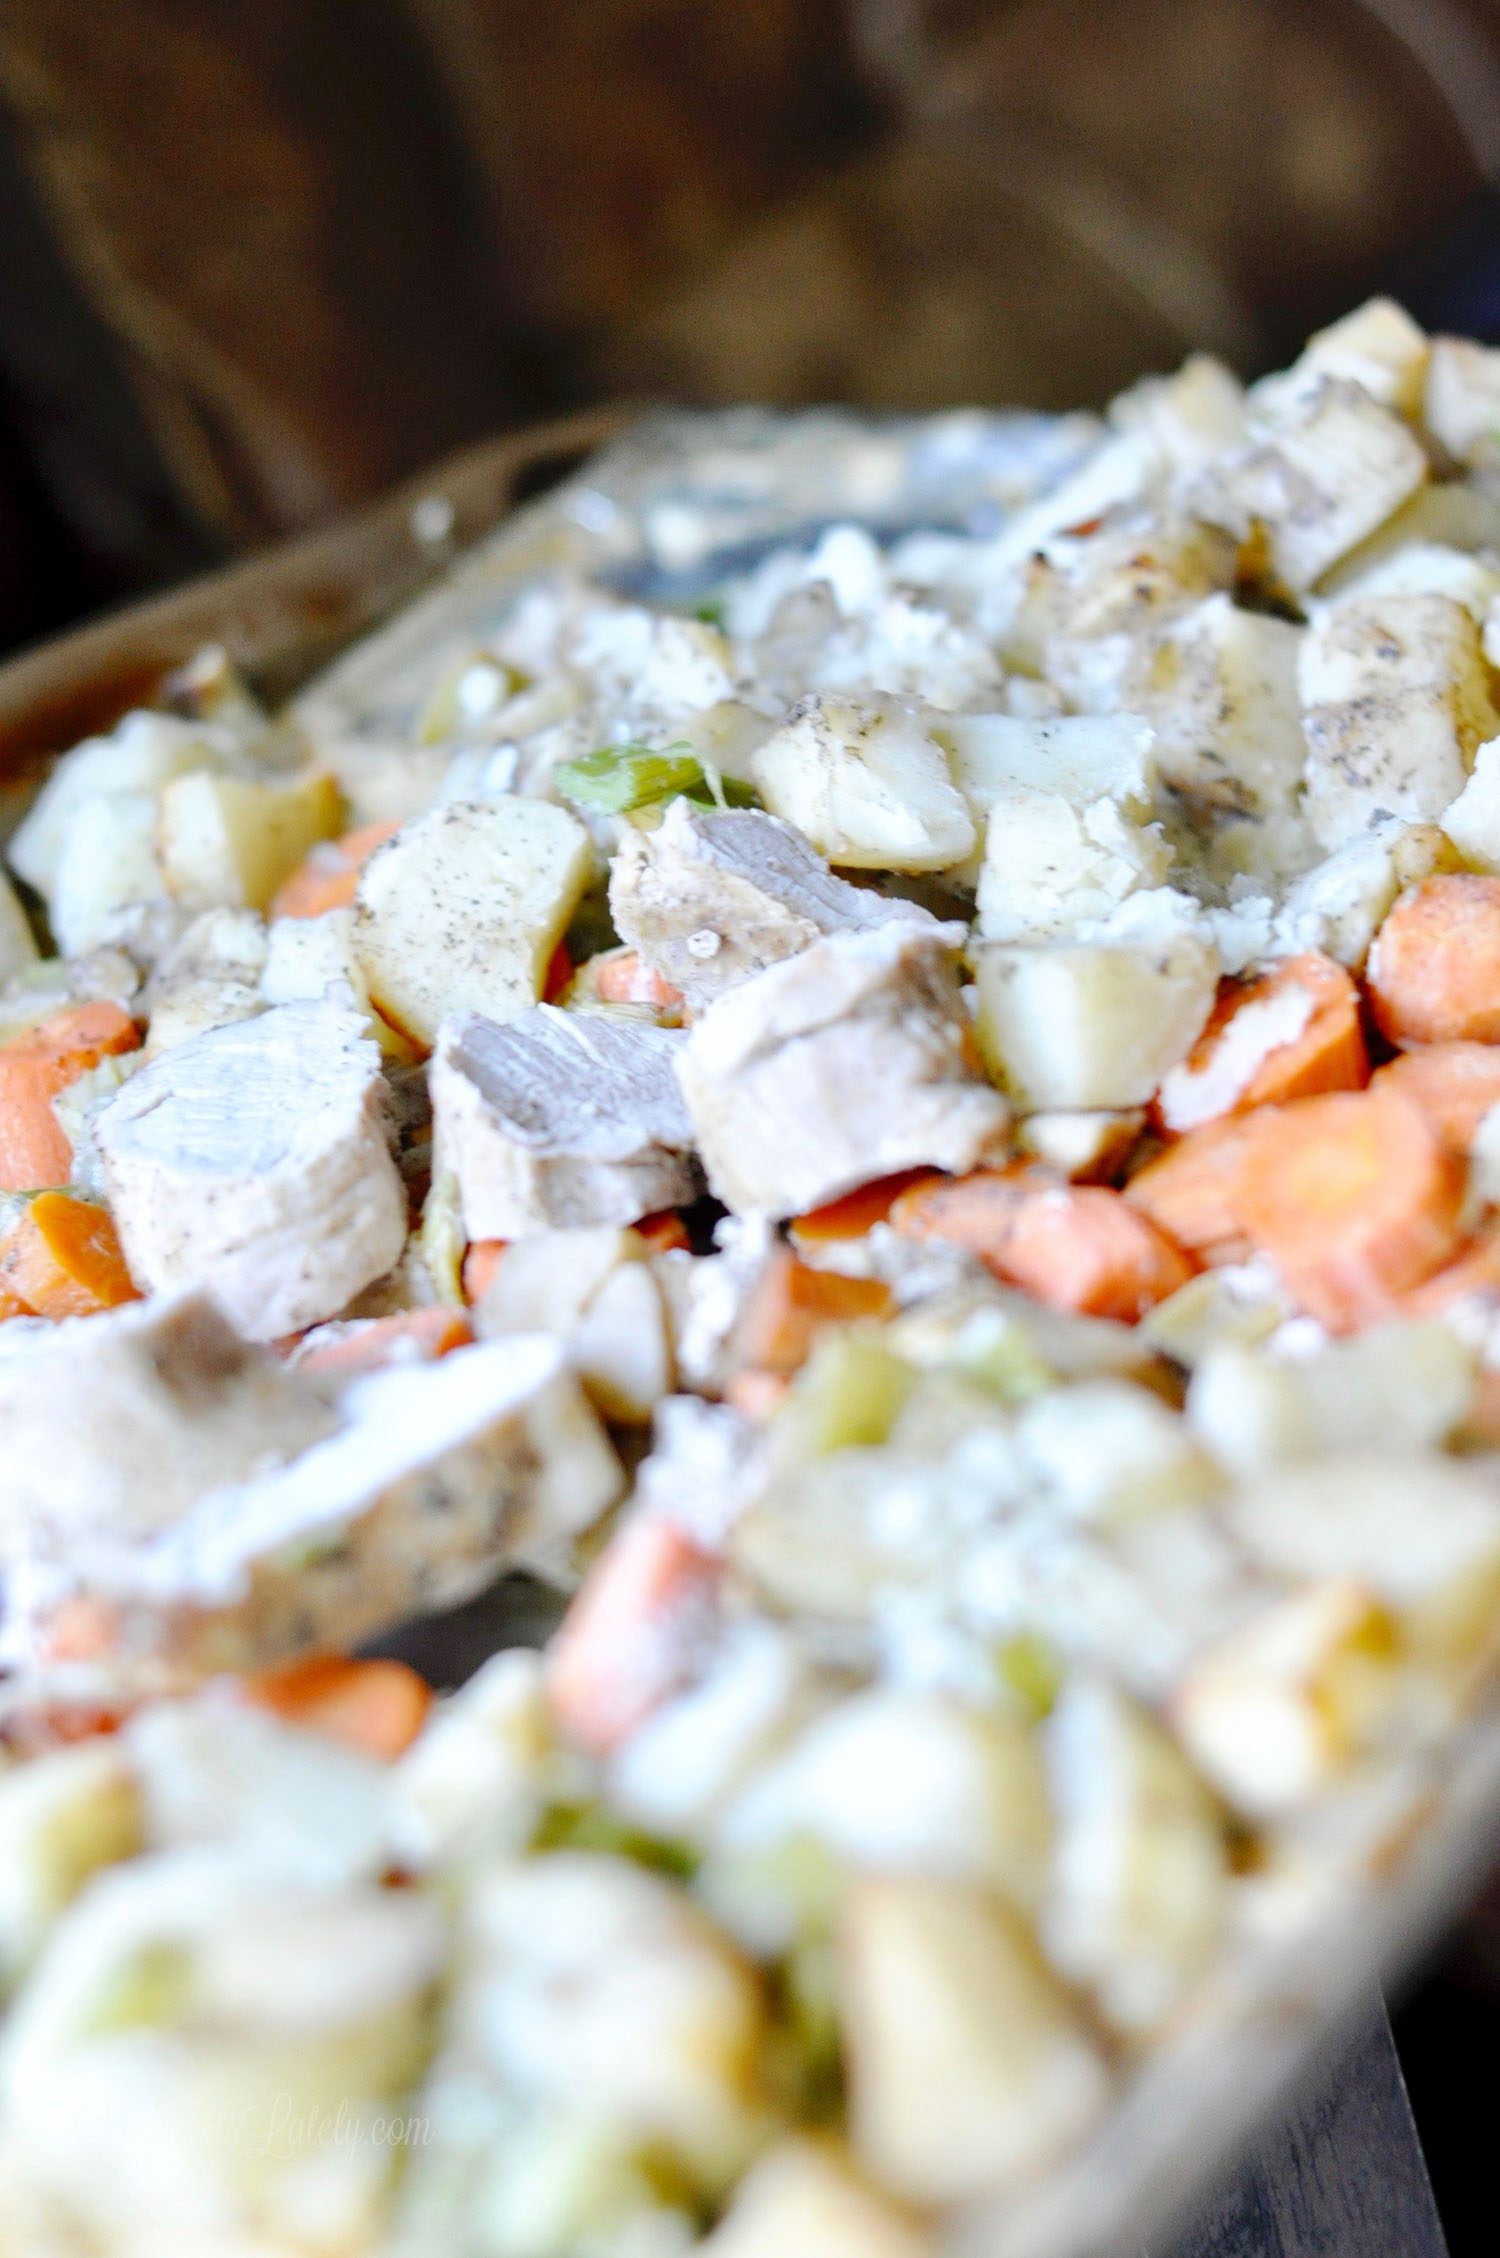 pork tenderloin, carrots, apples, potatoes, and celery on a sheet pan.